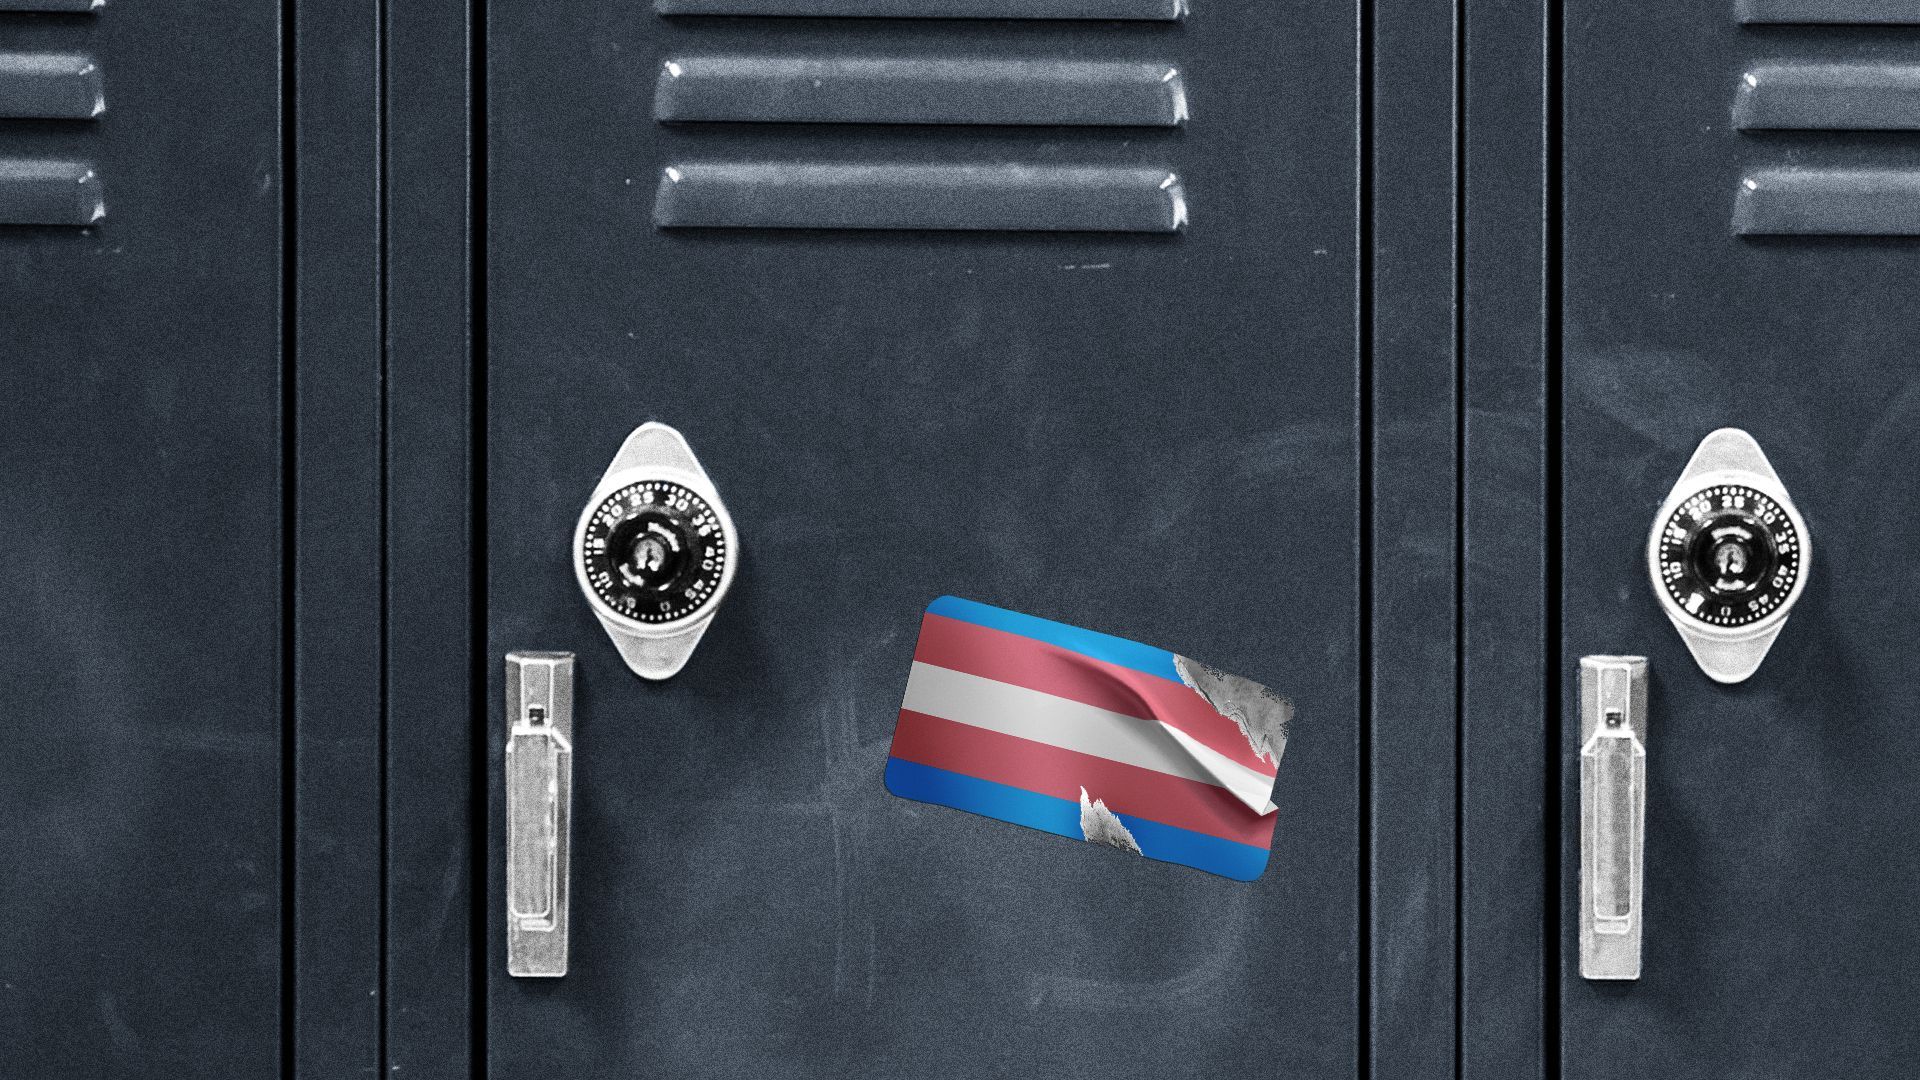 Illustration of a worn and torn trans flag sticker on a school locker.